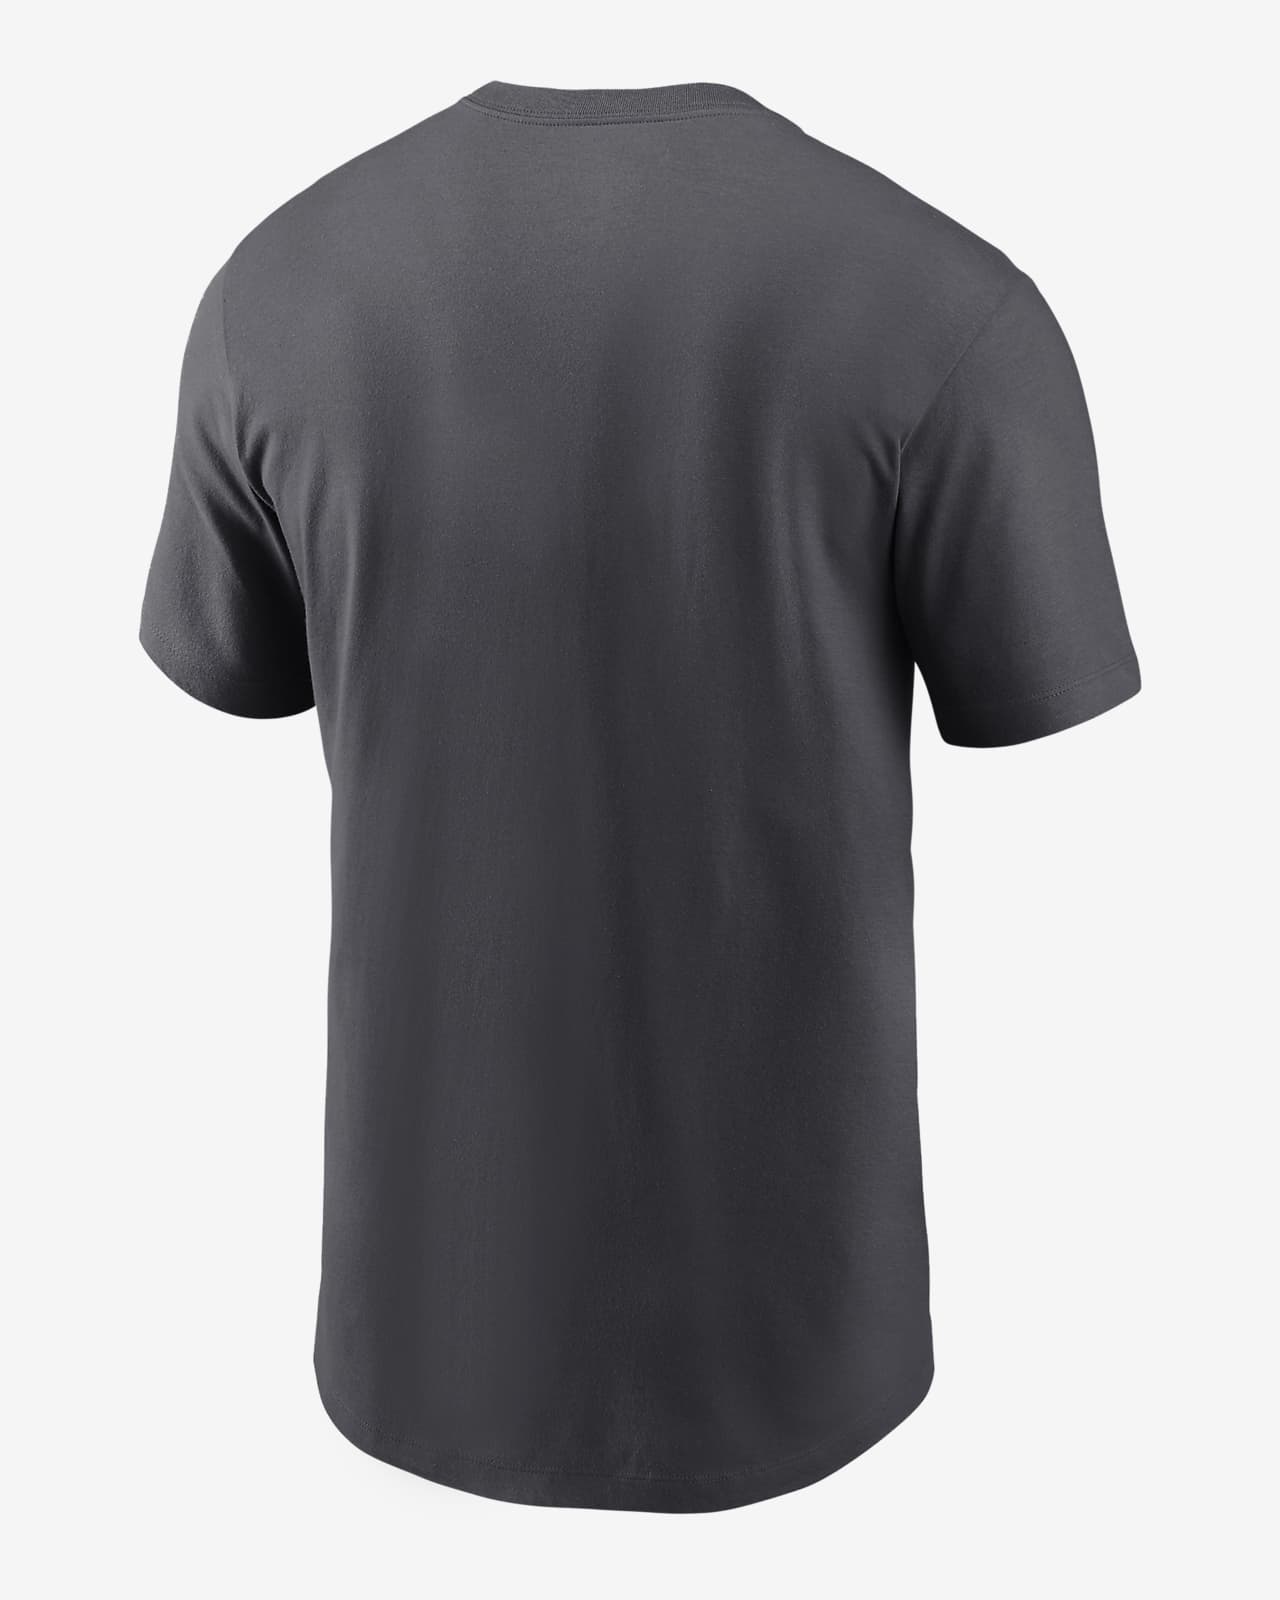 Nike Super Bowl LVII Bound Local (NFL Kansas City Chiefs) Men's T-Shirt